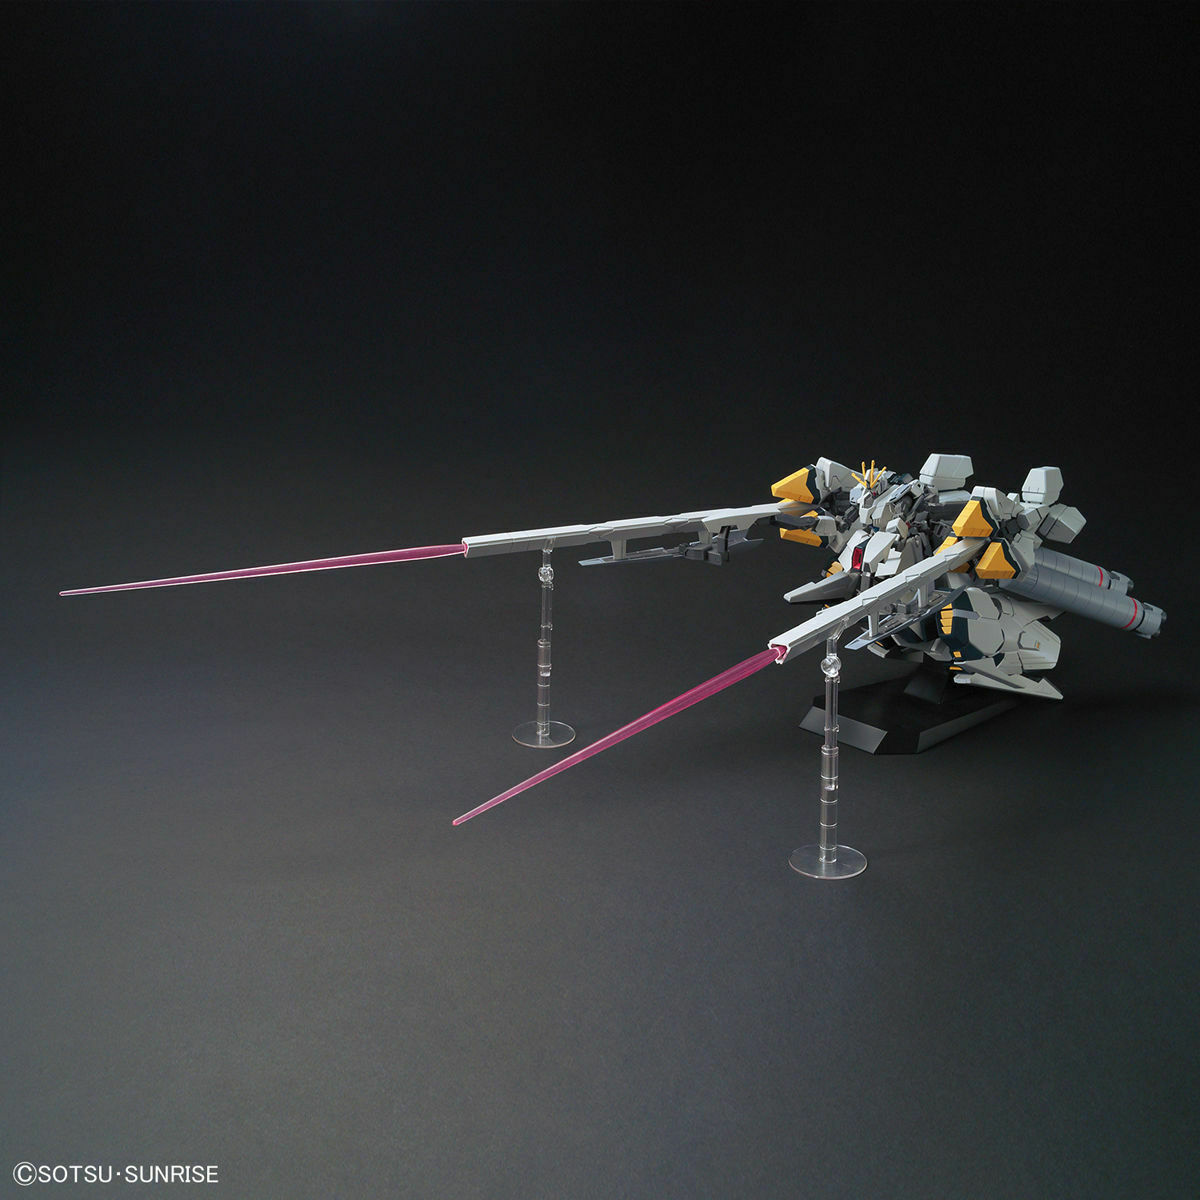 Bandai HGUC 1/144 Narrative Gundam (A-Packs)